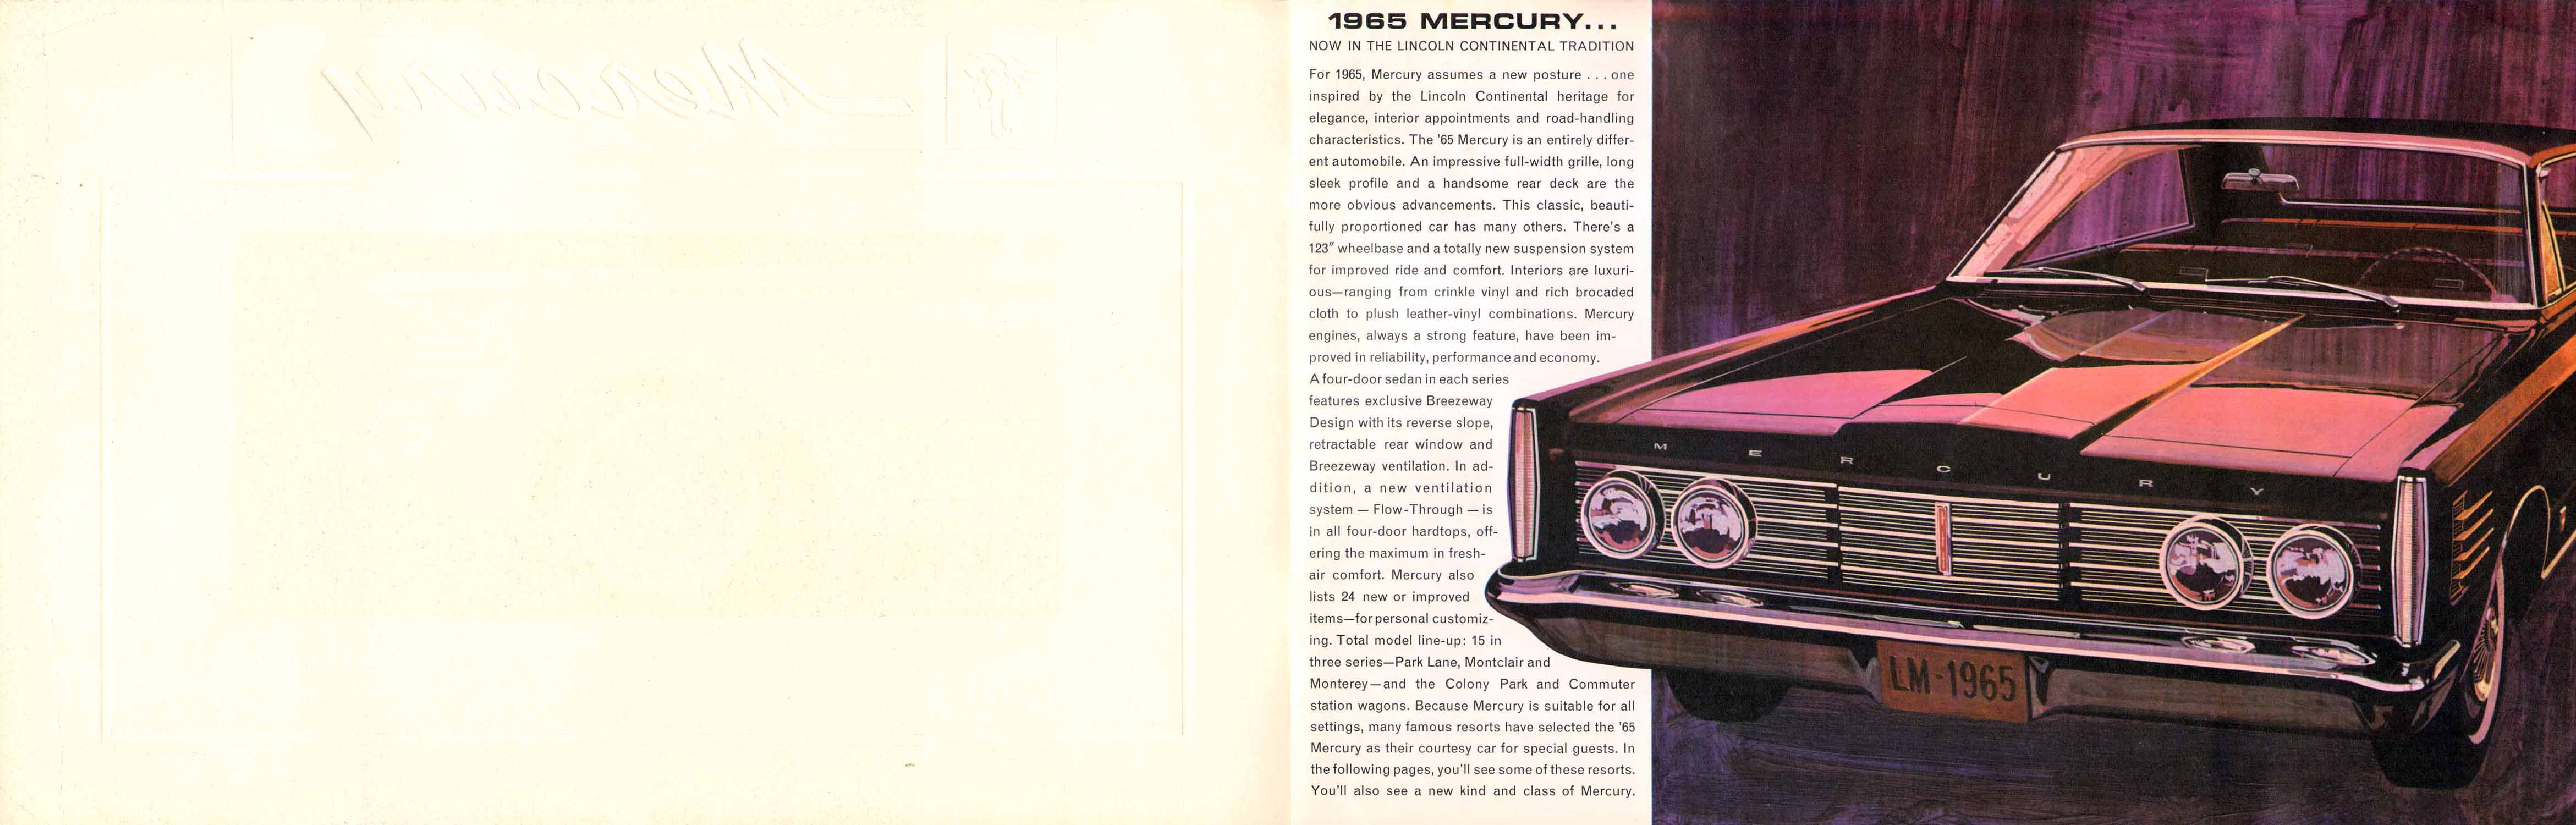 1965 Mercury Full Size-02-03